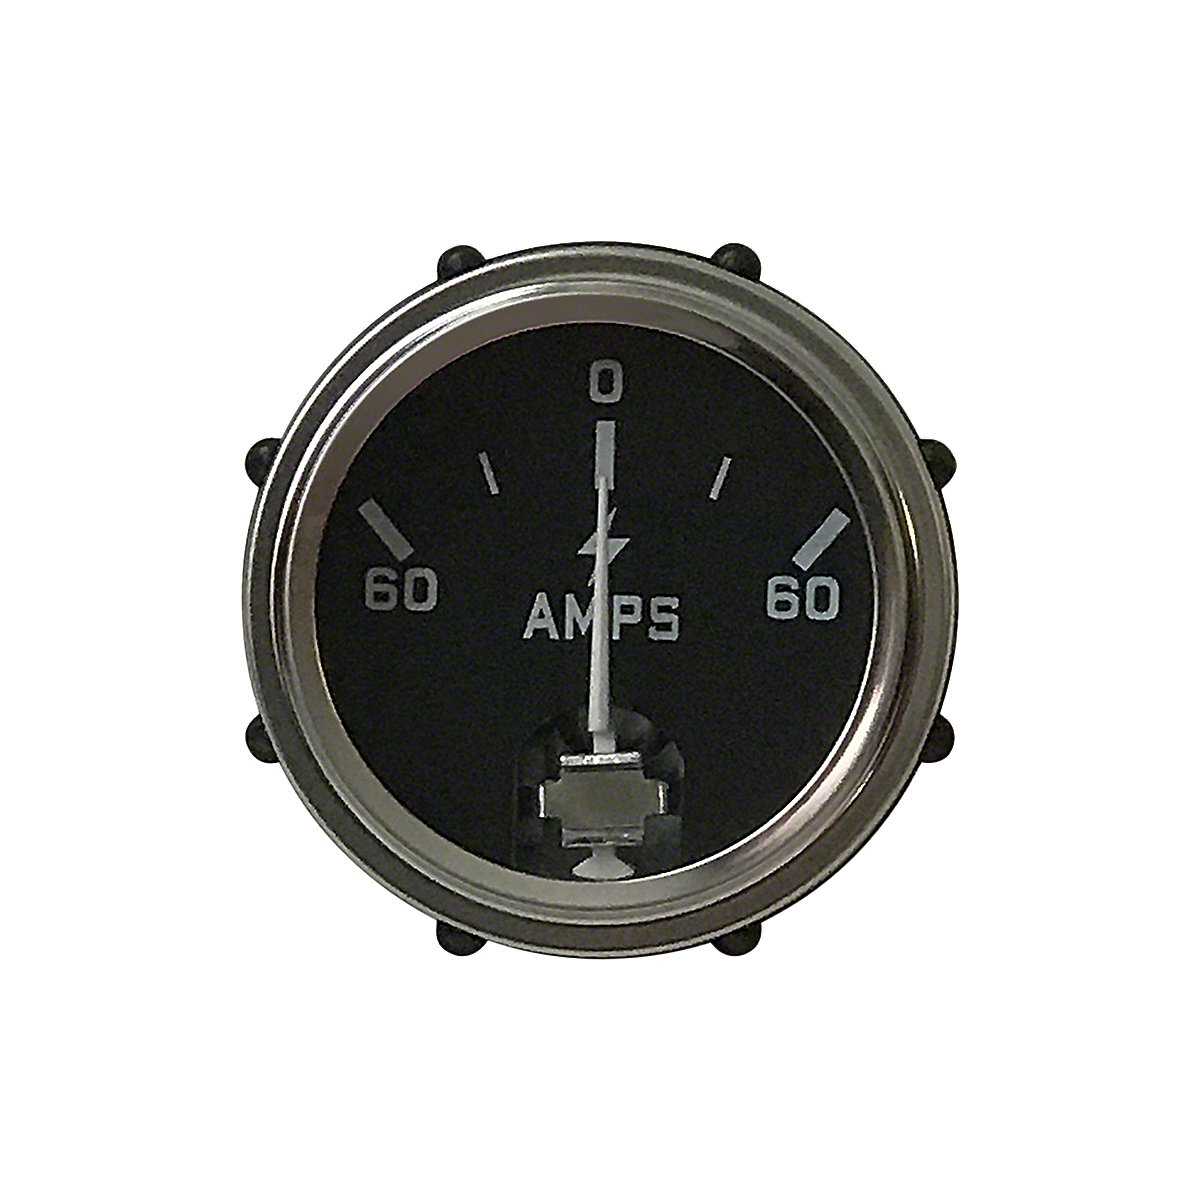 Ammeter Gauge (60-0-60)